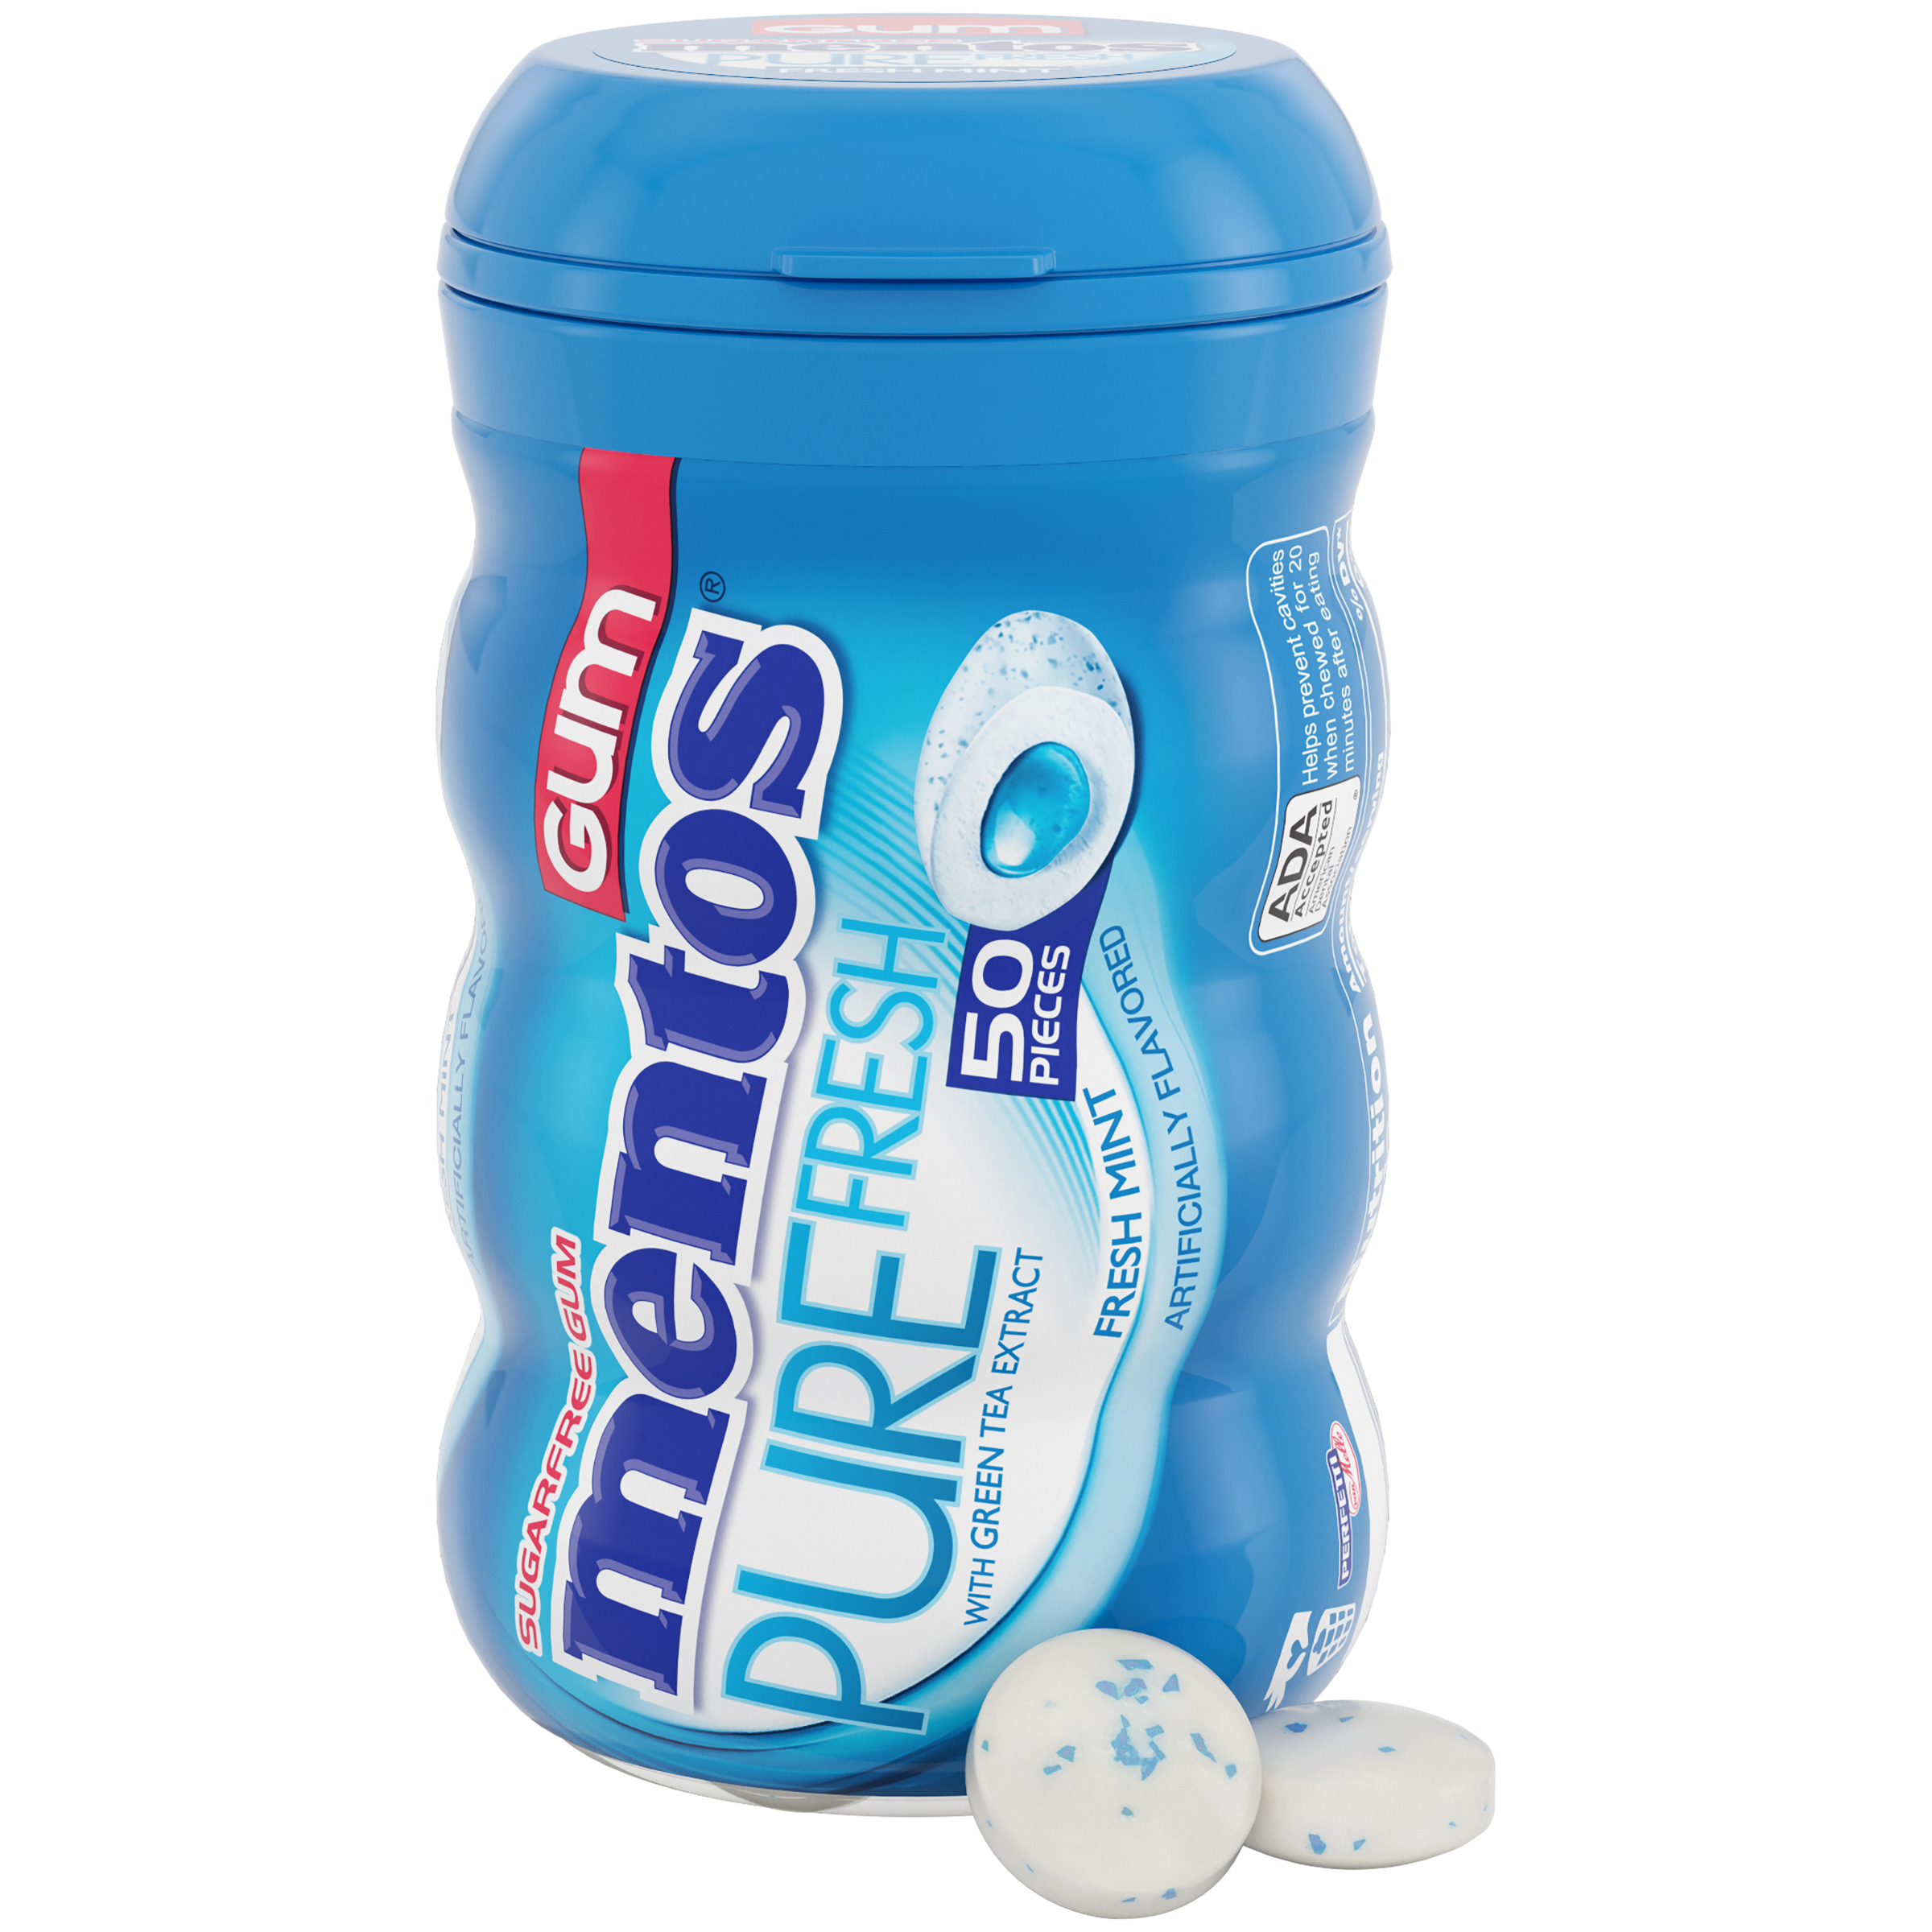 Mentos Gum Sugar-Free Fresh Mint Chewing Gum, 50 Regular Size Pieces, Bottle - image 1 of 6